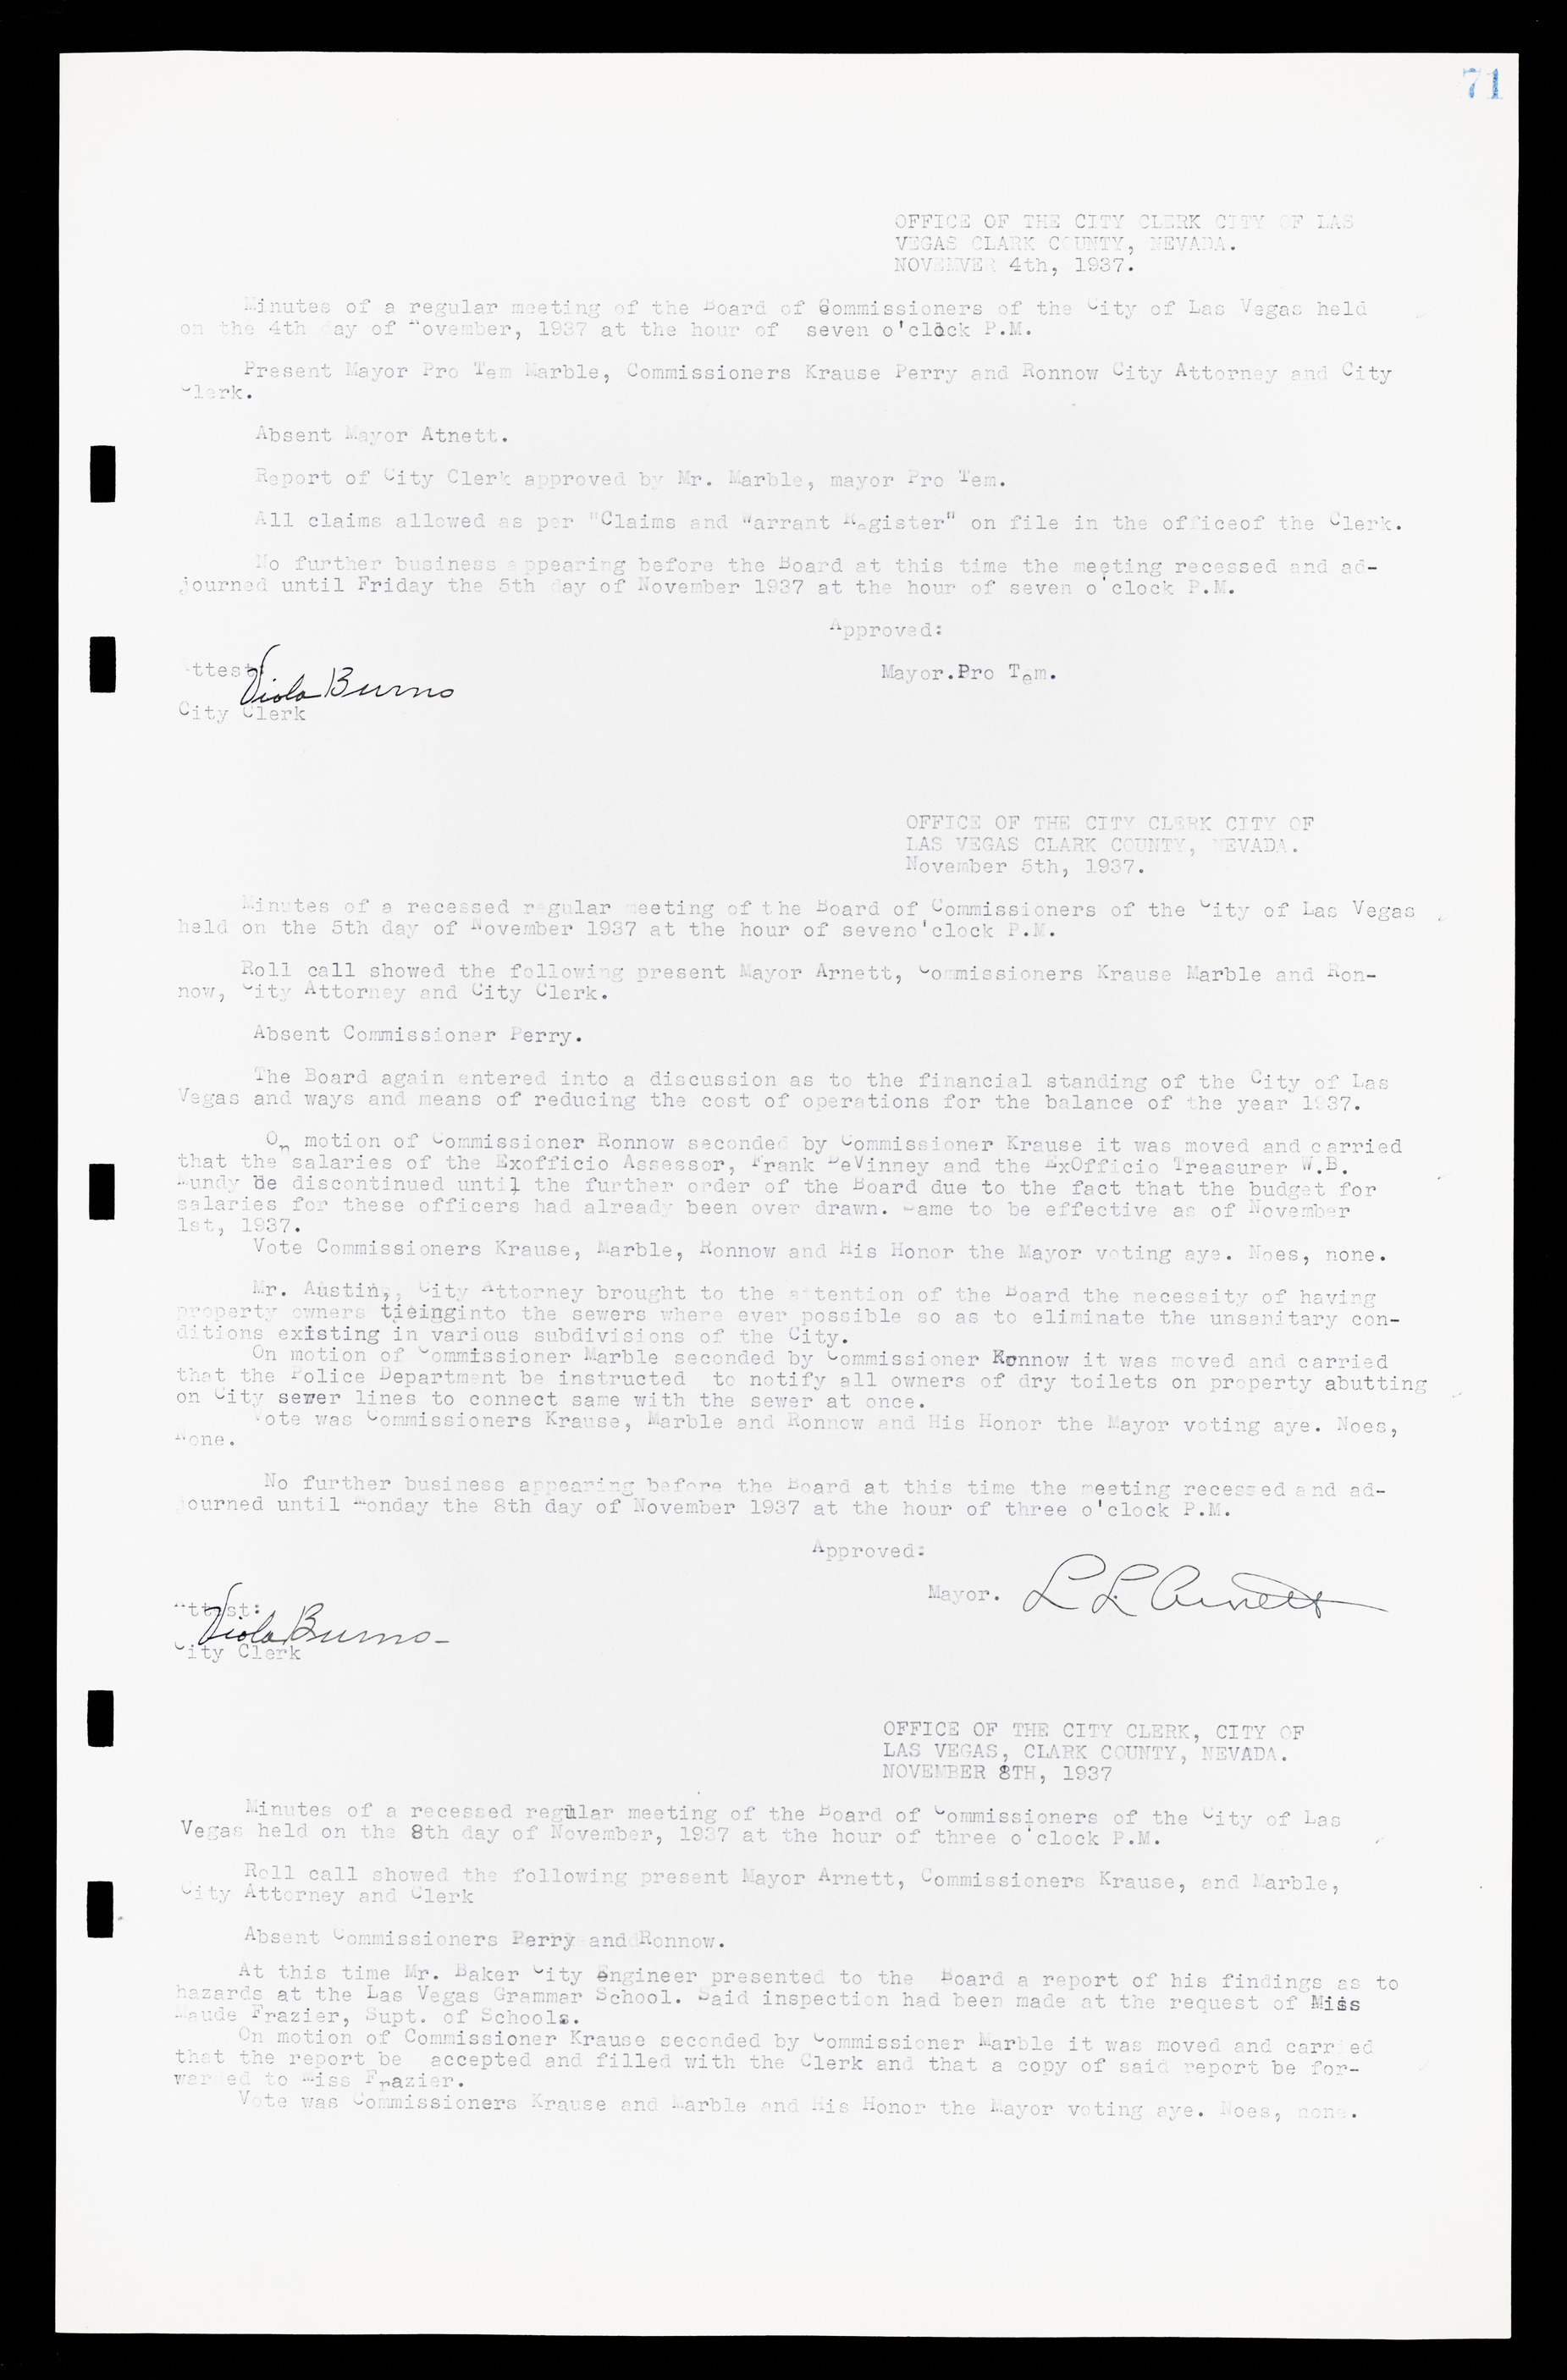 Las Vegas City Commission Minutes, February 17, 1937 to August 4, 1942, lvc000004-80